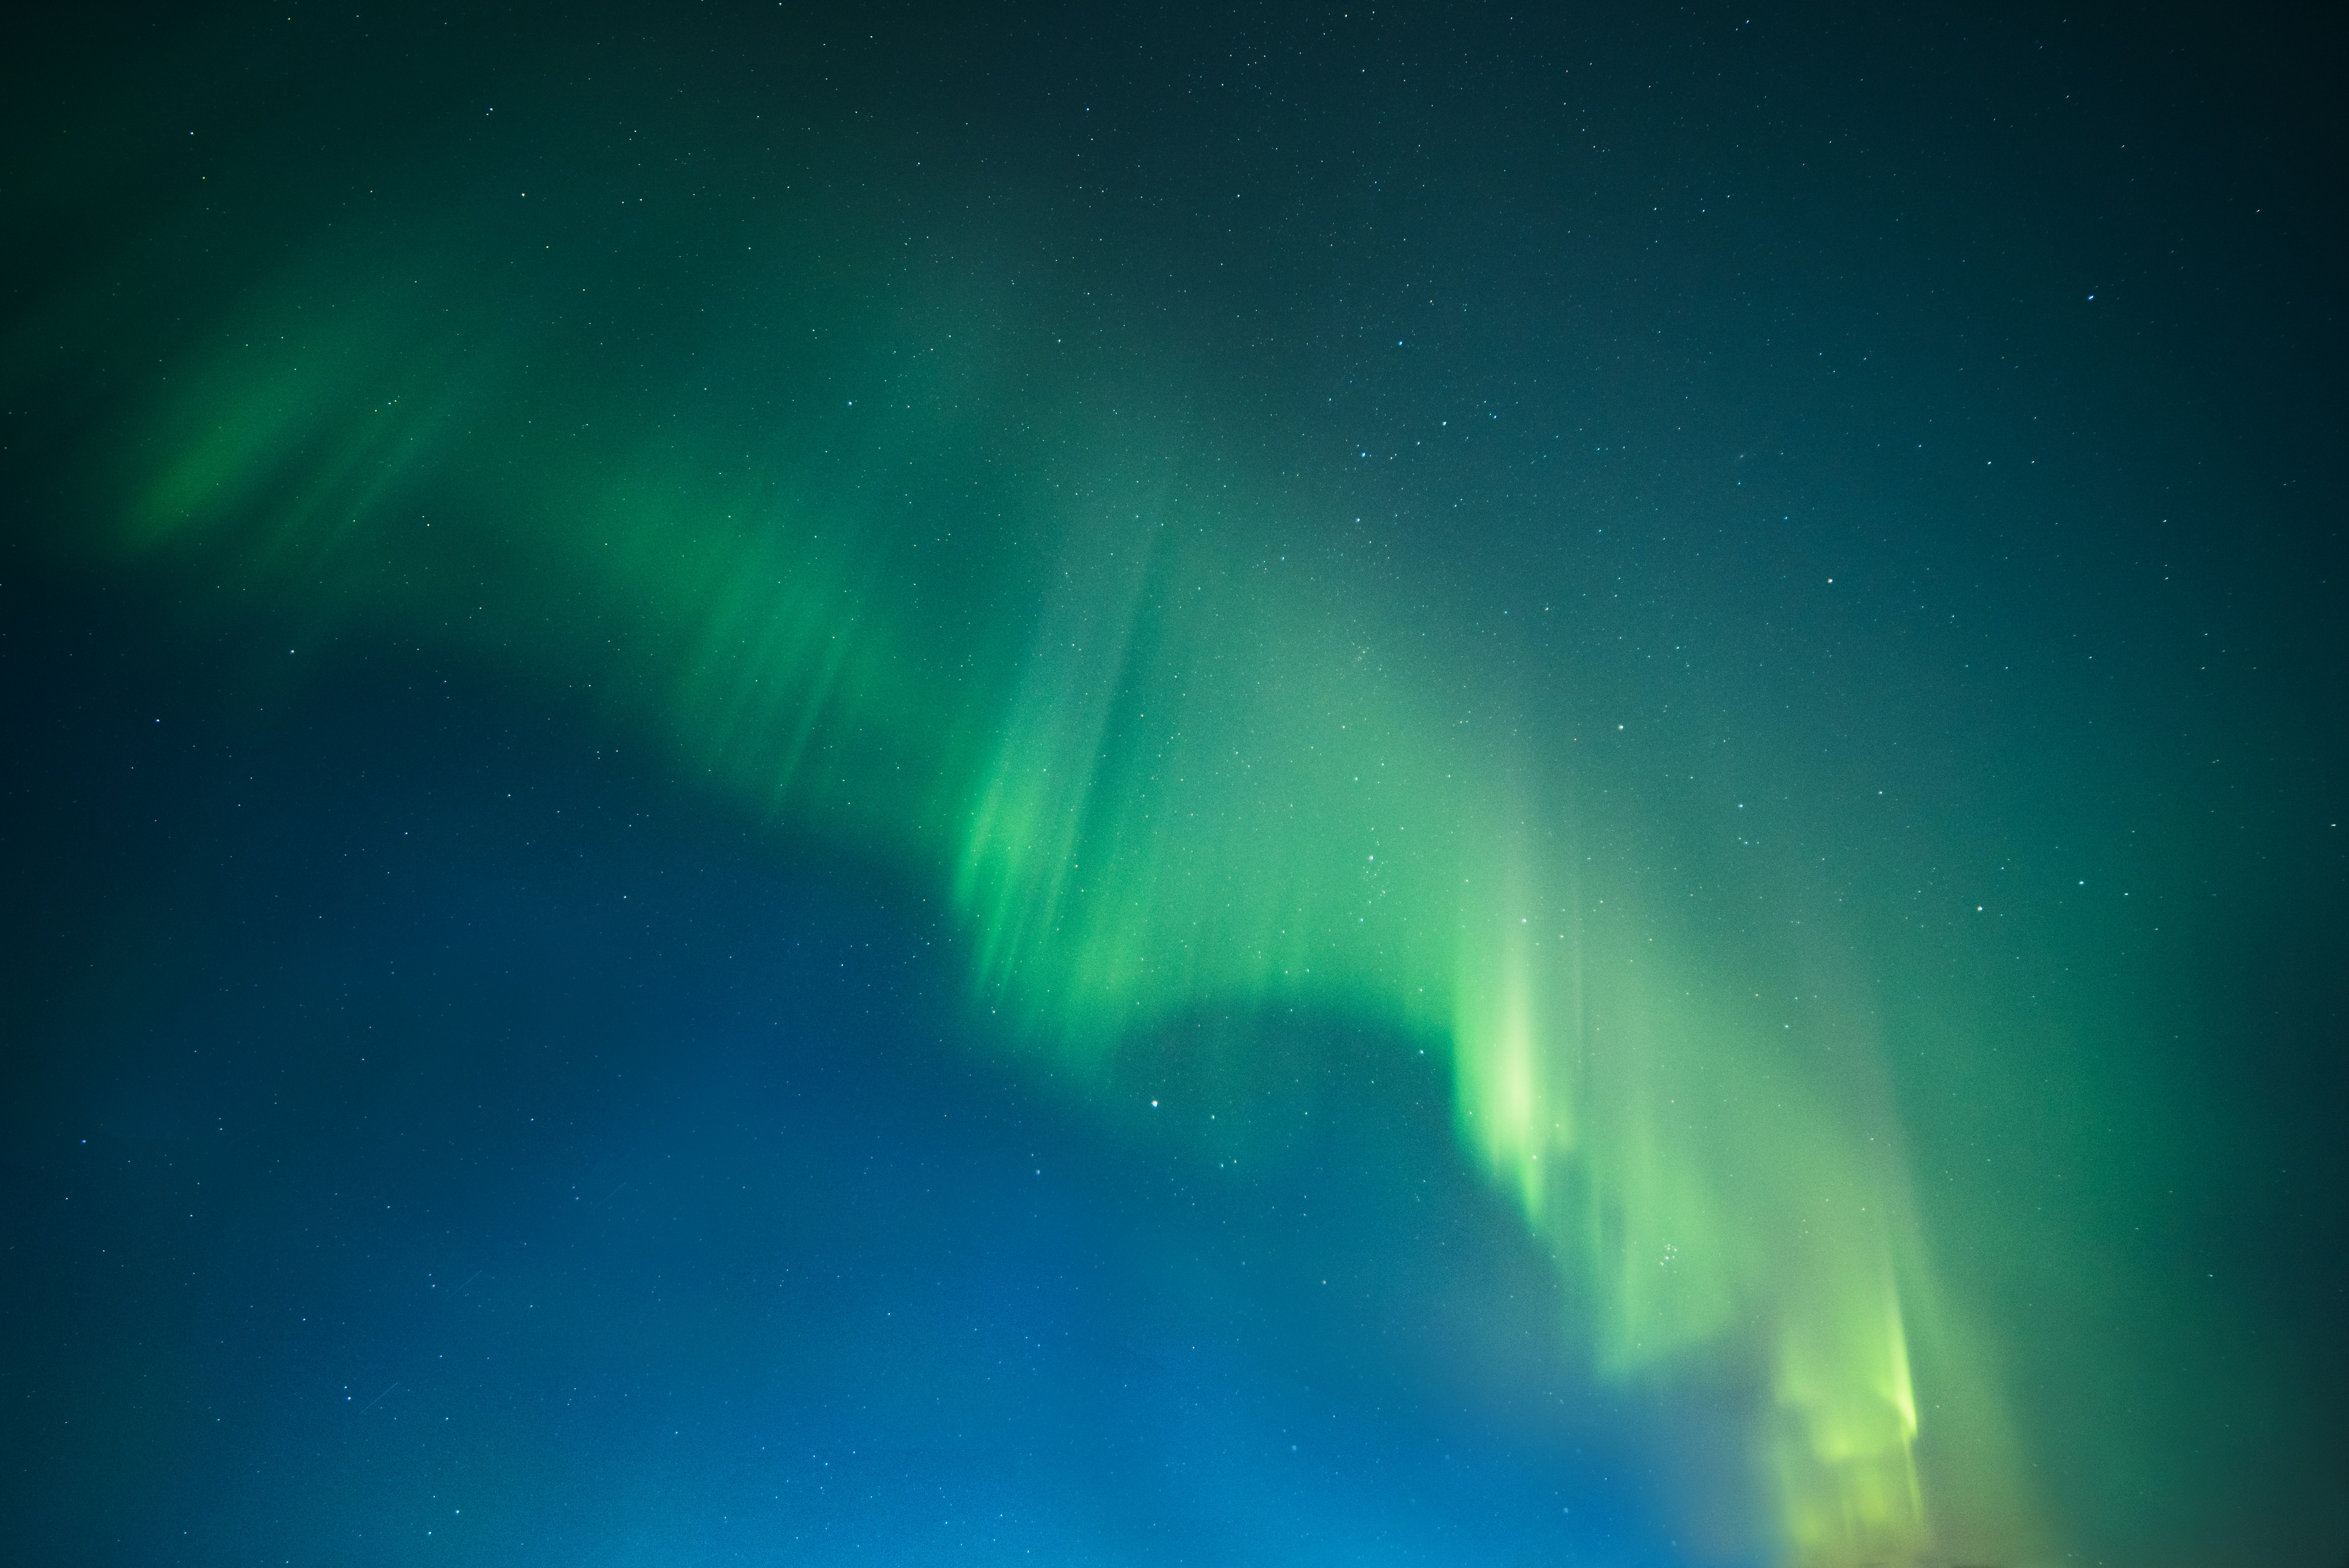 Photo of a green aurora borealis against a blue night sky